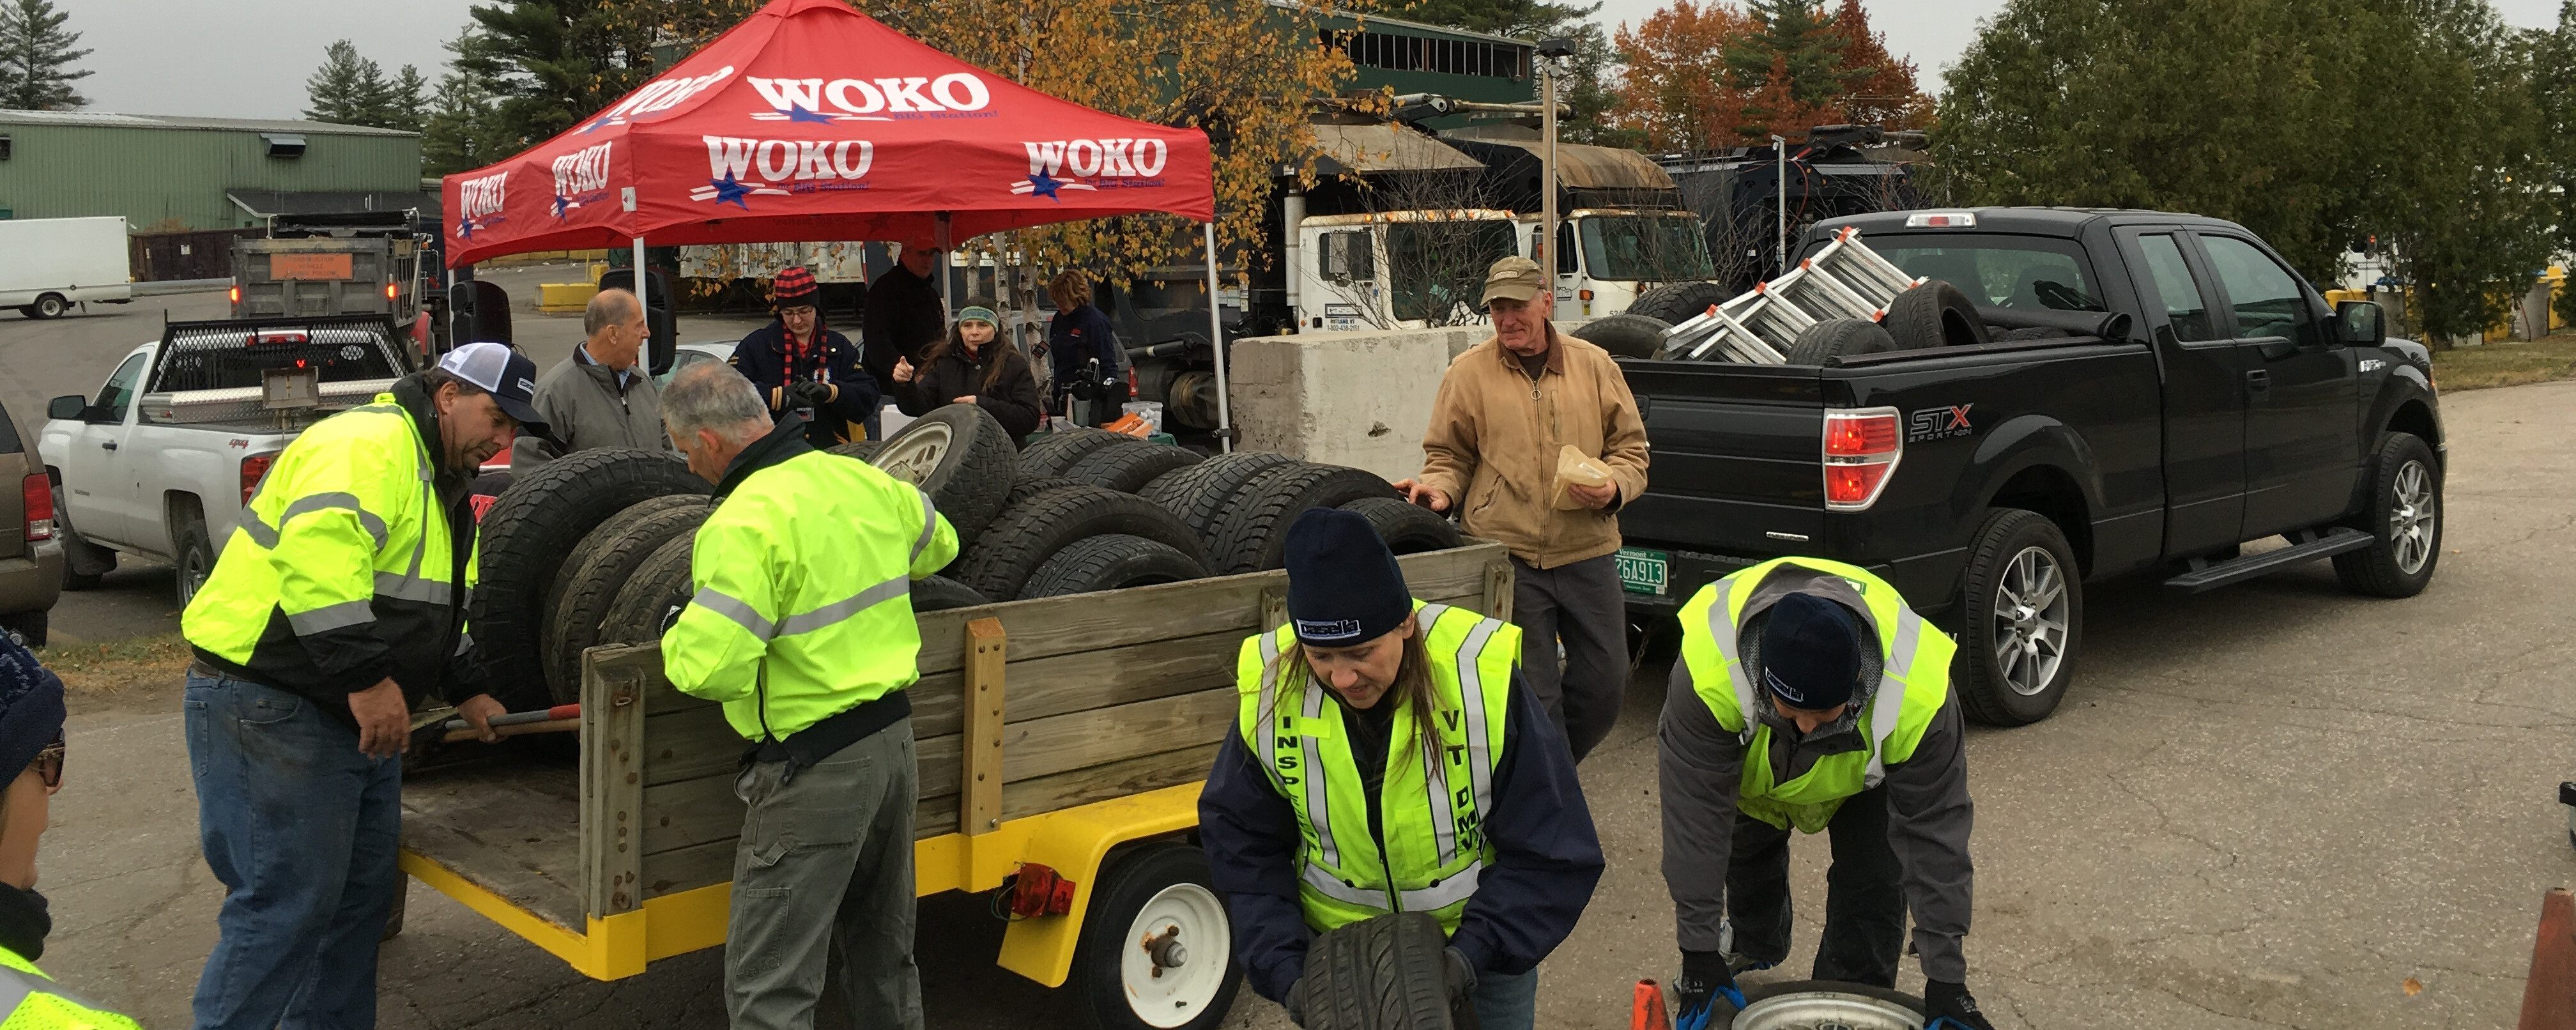 volunteers working around a trailer full of tires